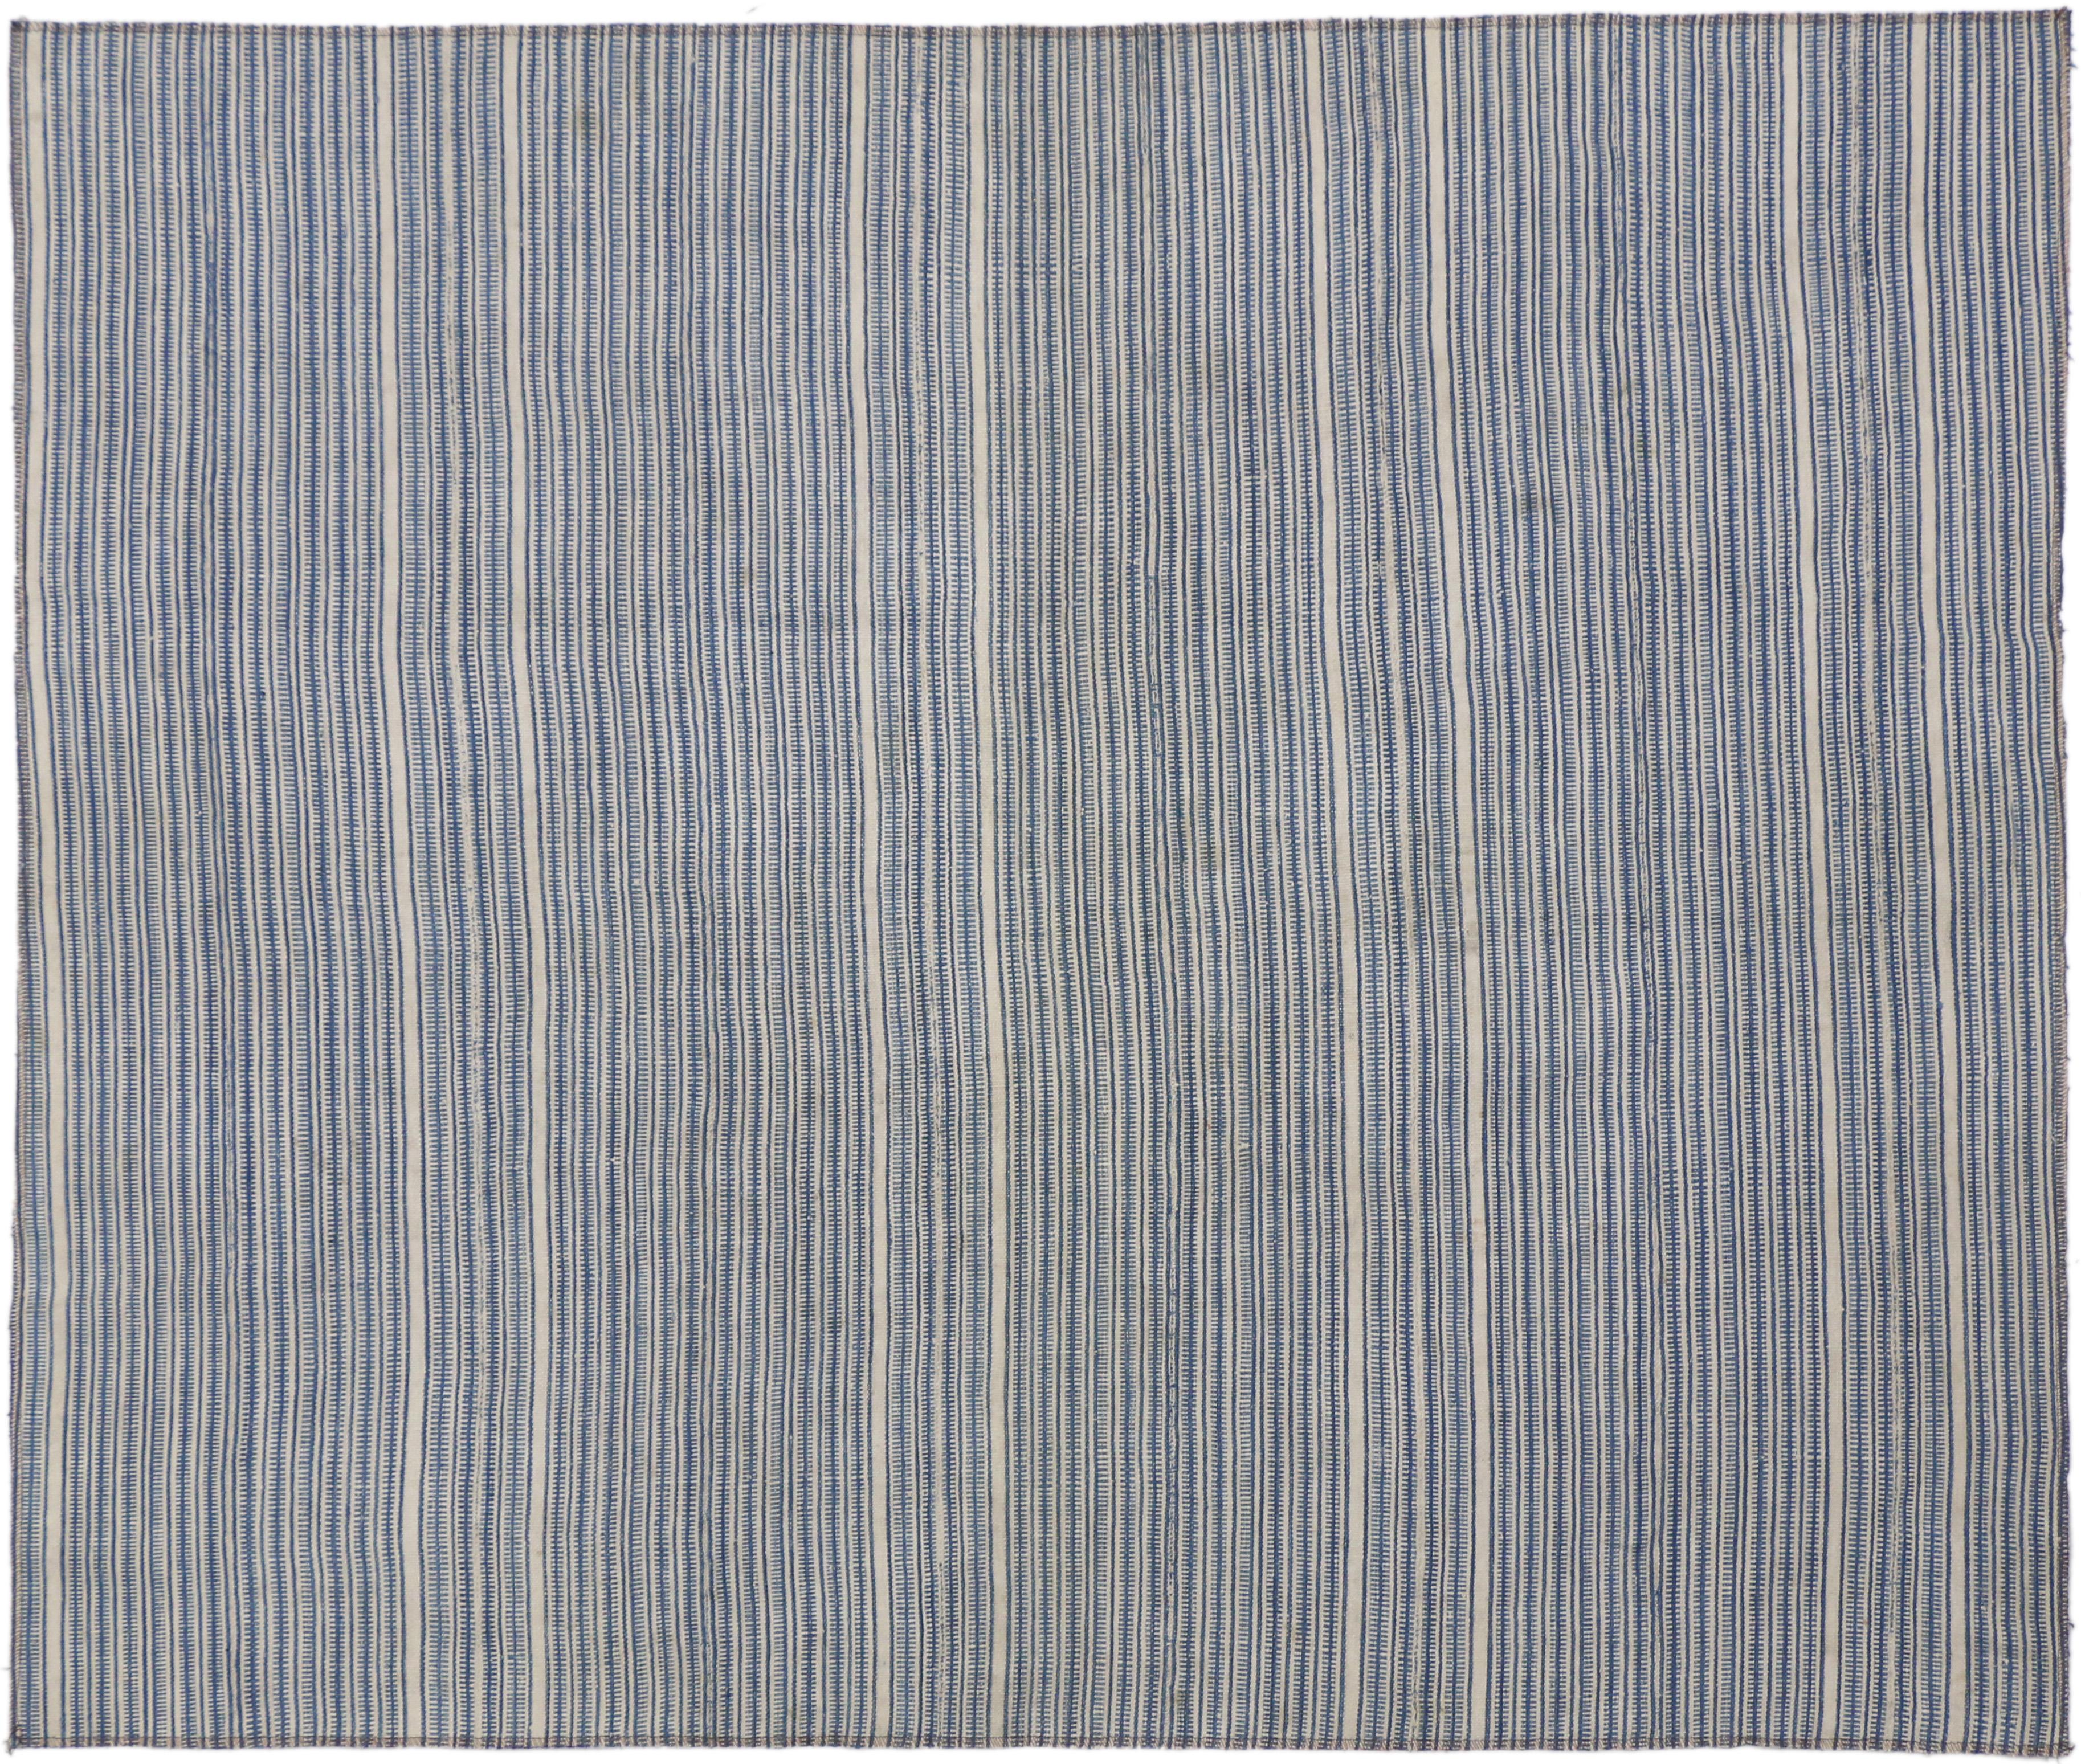 Blue and Ivory Crosshatch Stripe Kilim Rug, Casually Chic Coastal Style 3